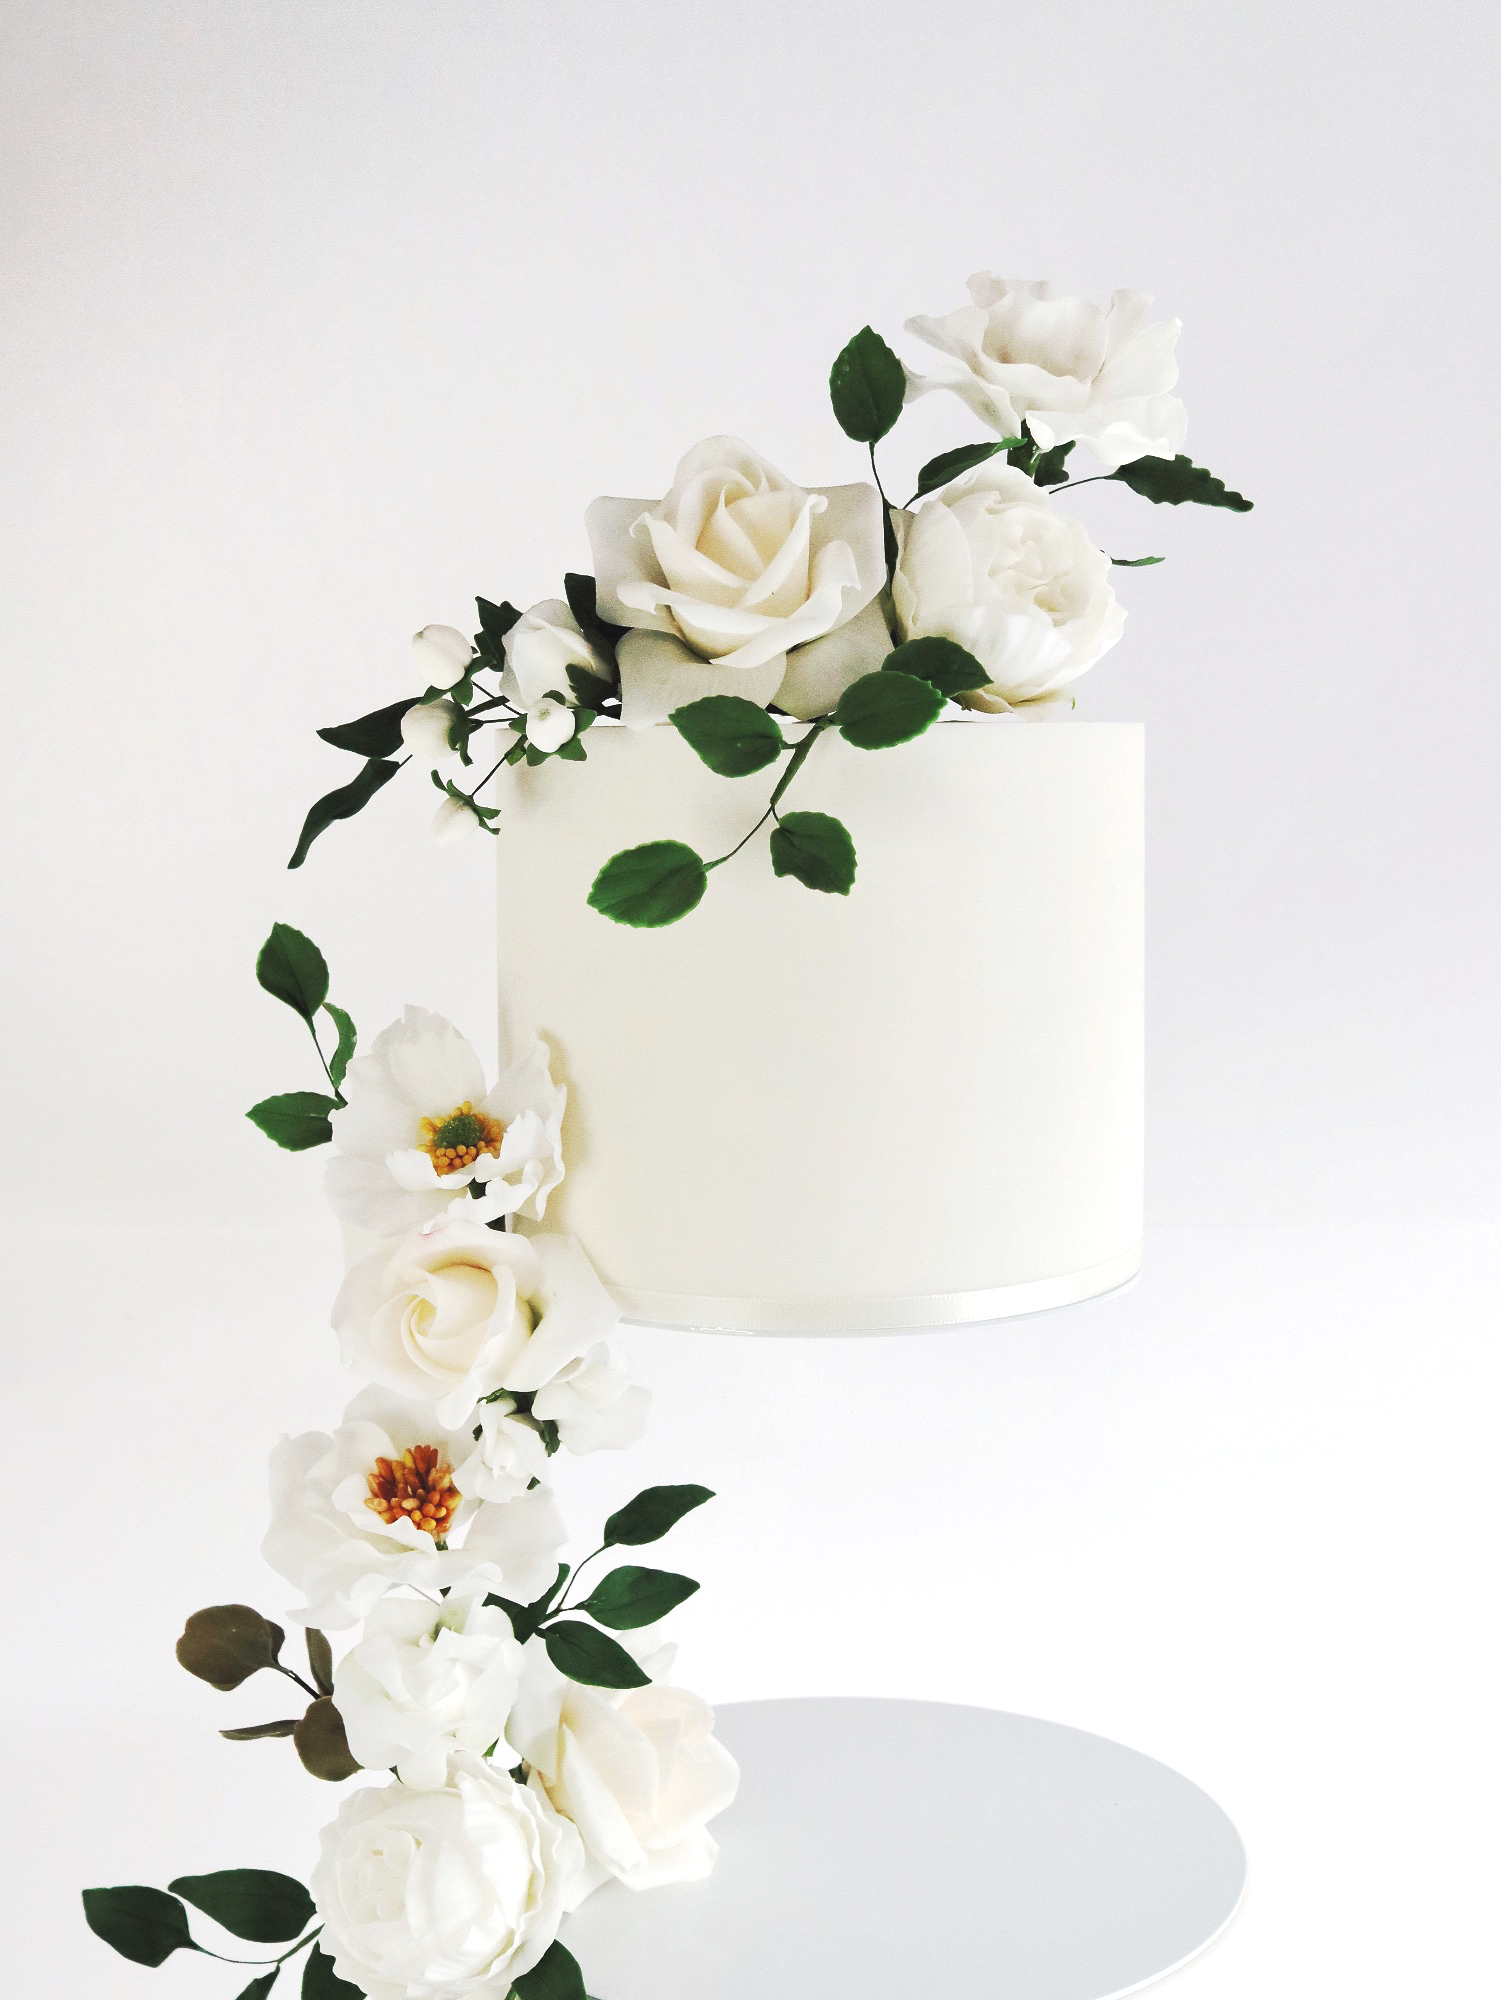 Textured wedding cake